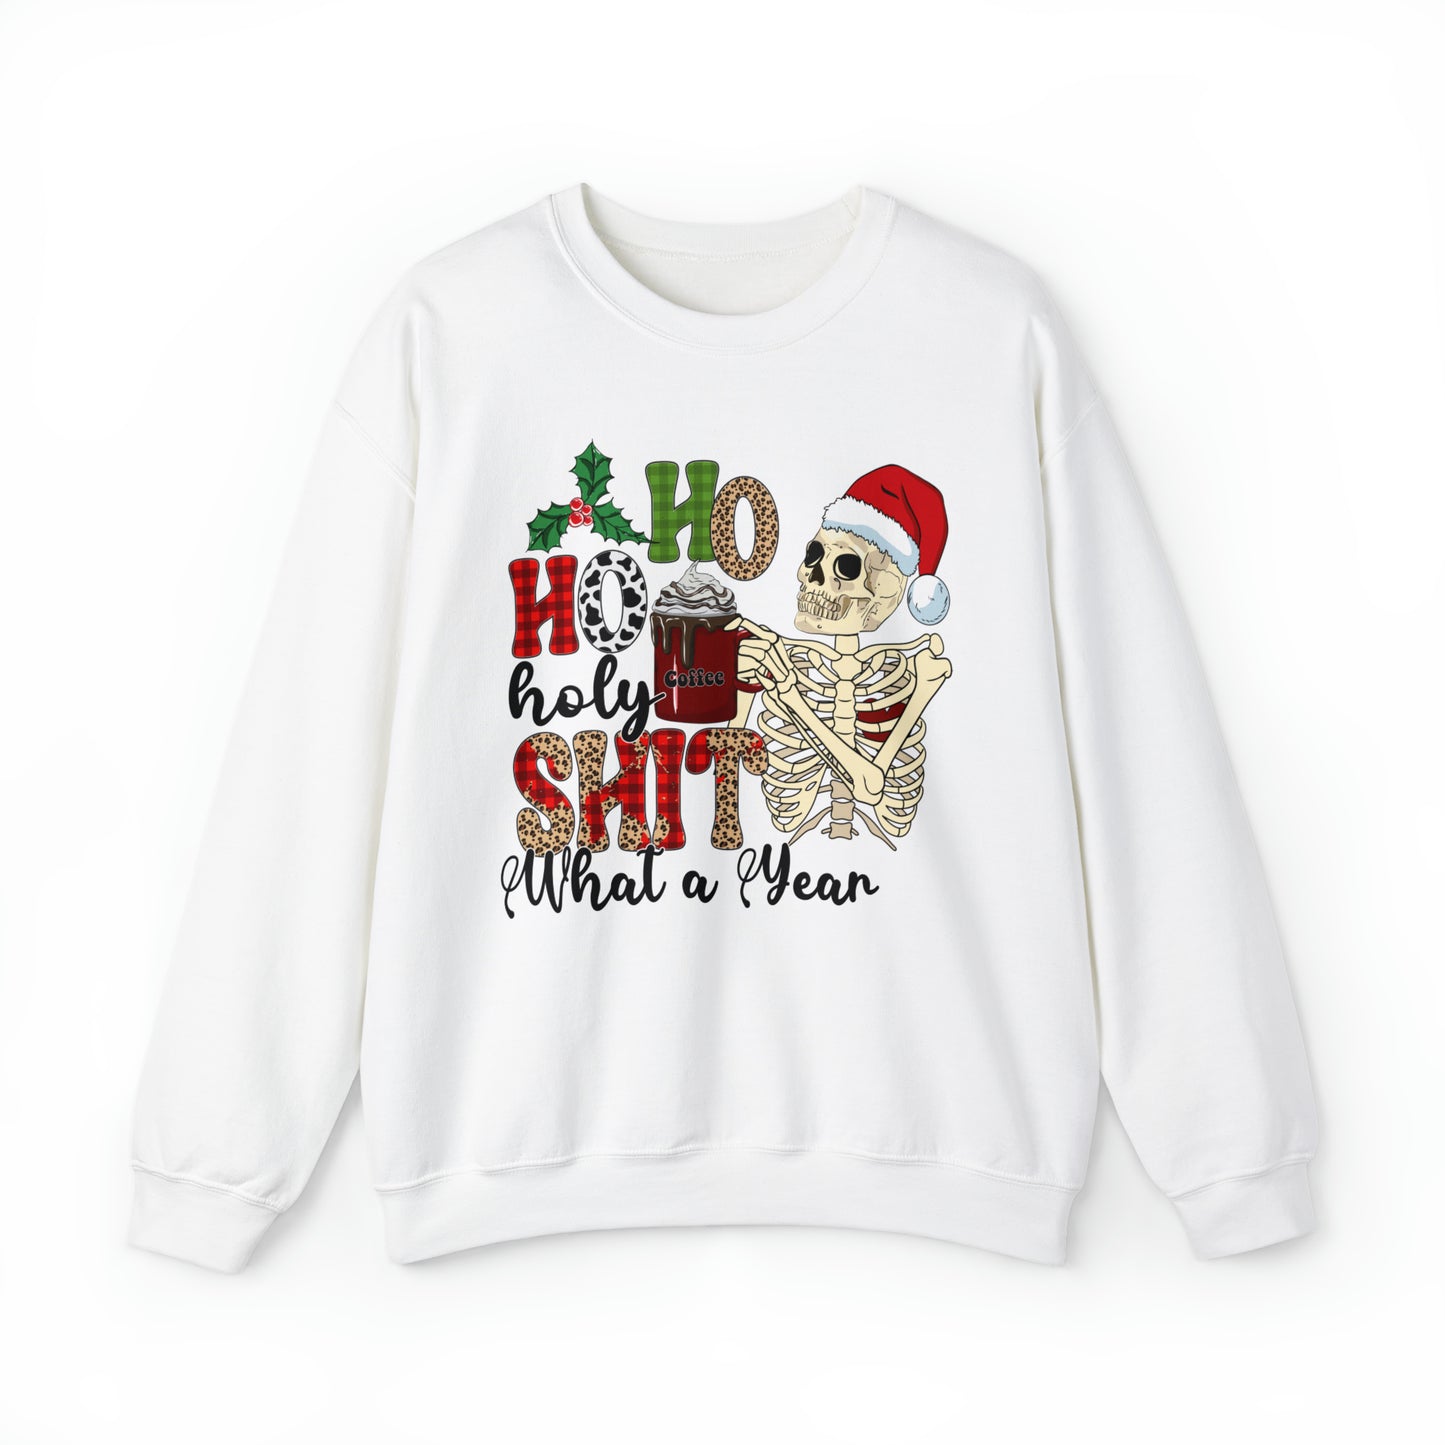 HOHOHO What a Year Women's Christmas Crewneck Sweatshirt